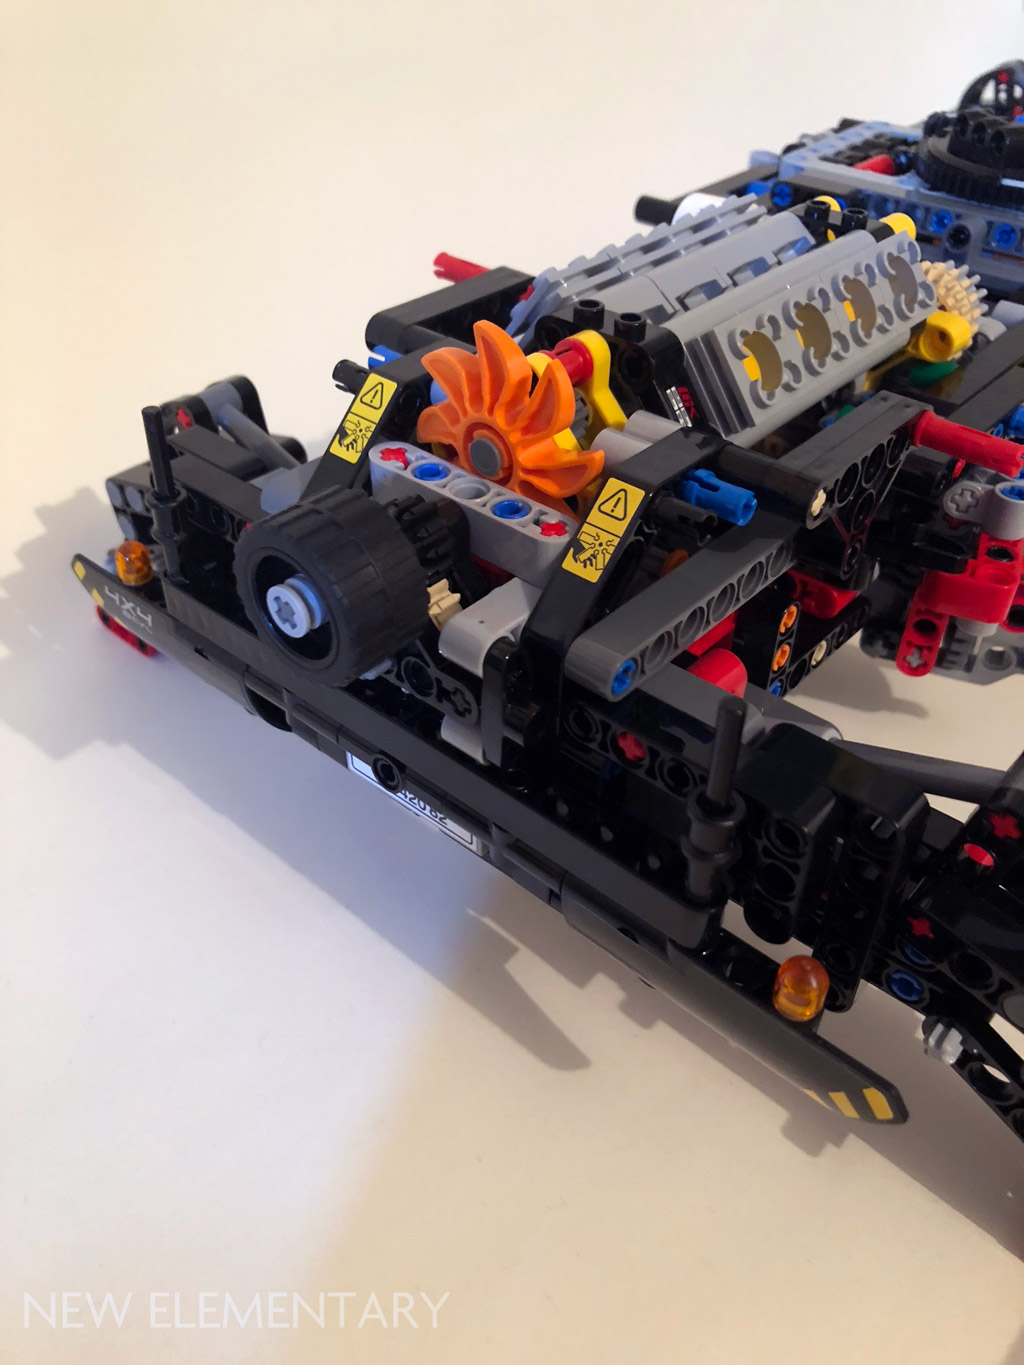 LEGO® Technic 42082 Rough Terrain Crane | New Elementary: LEGO® parts, sets techniques